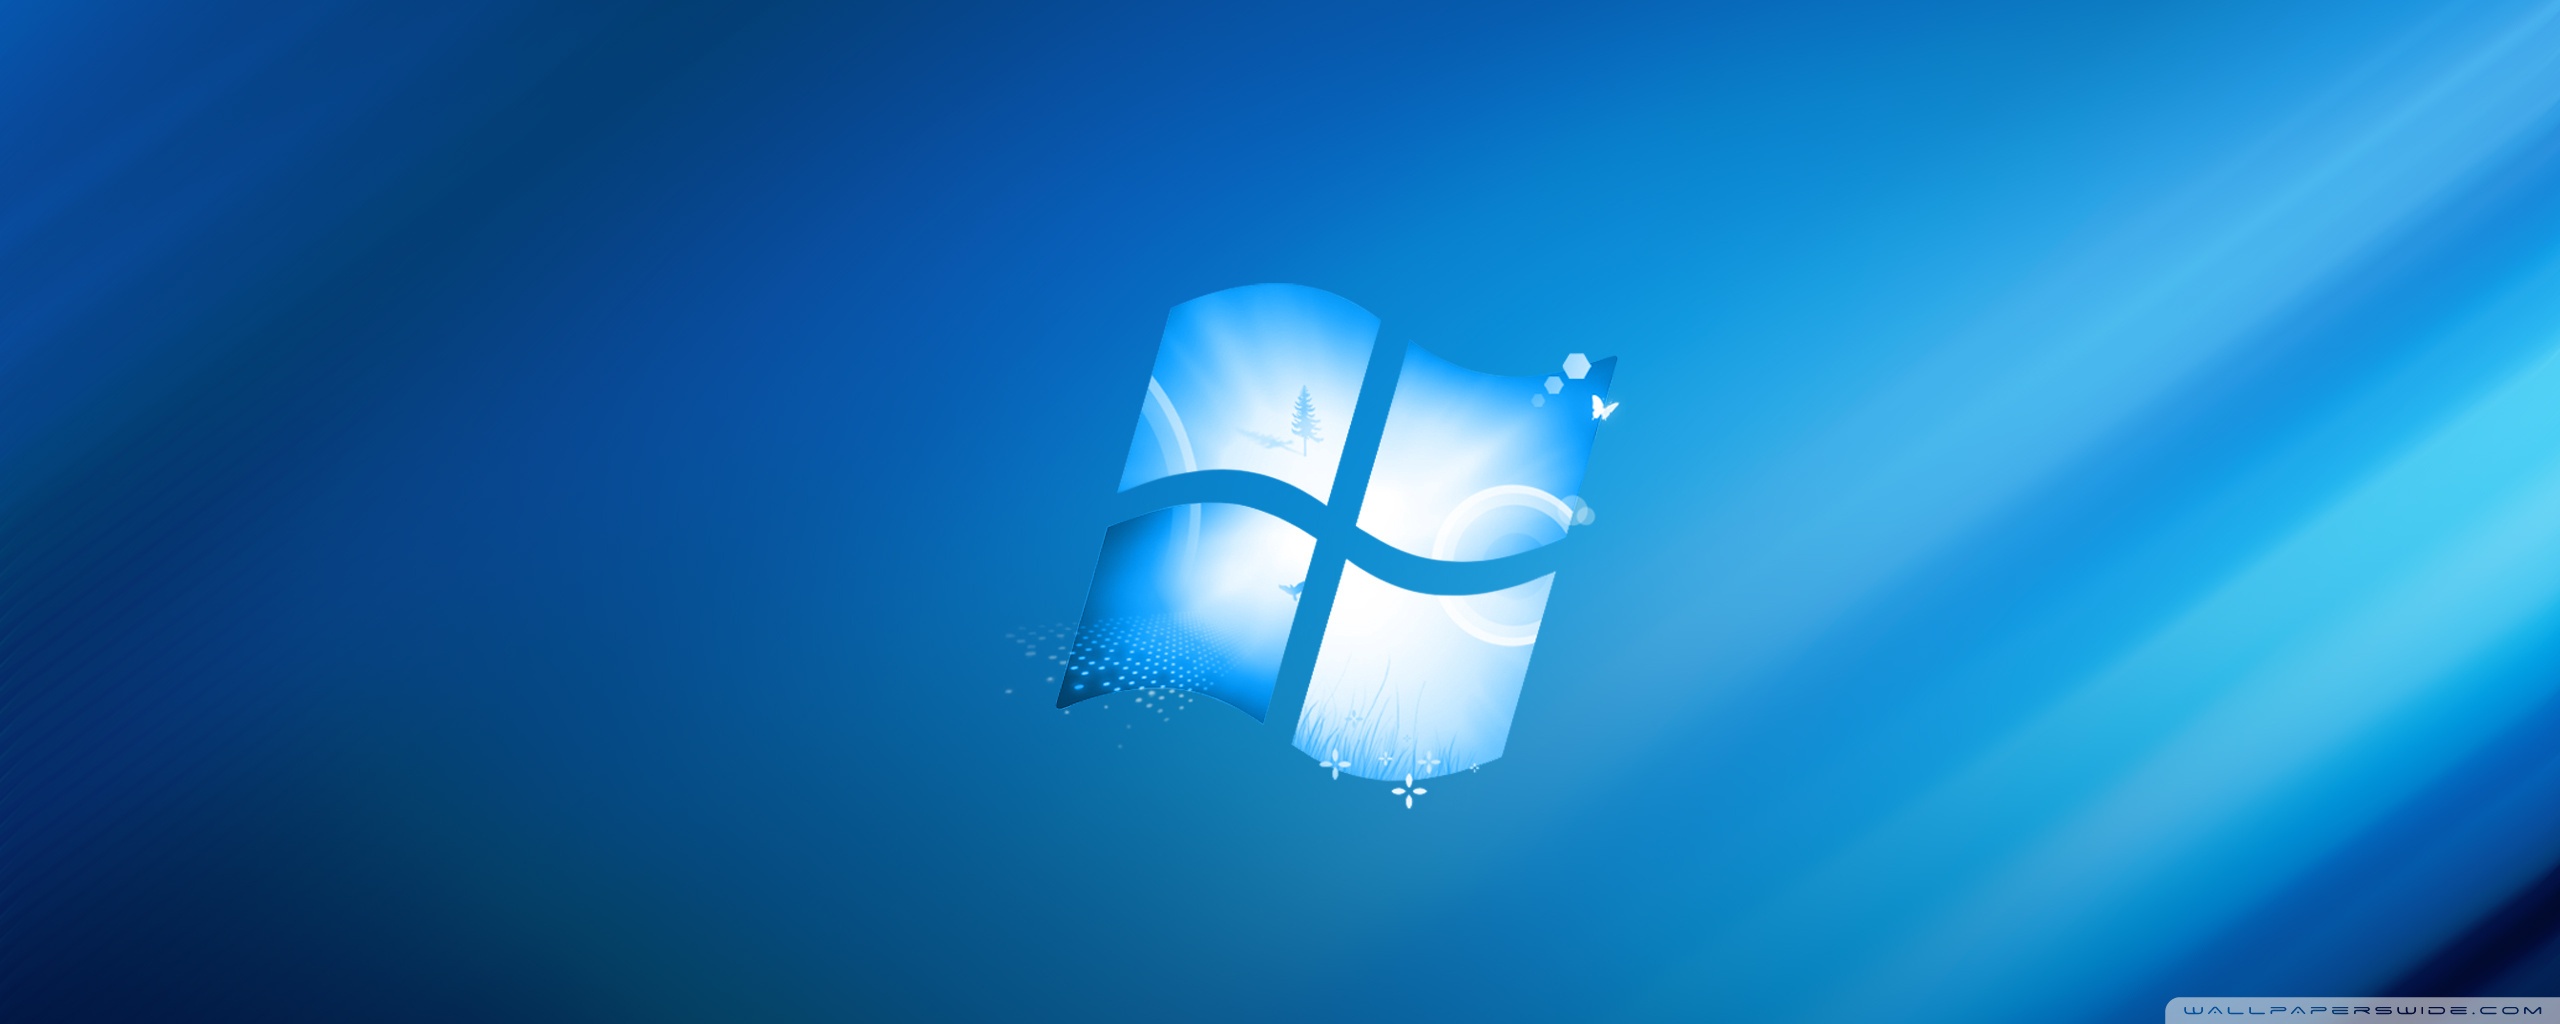 Rate This Wallpaper - Windows 7 Enterprise Desktop , HD Wallpaper & Backgrounds